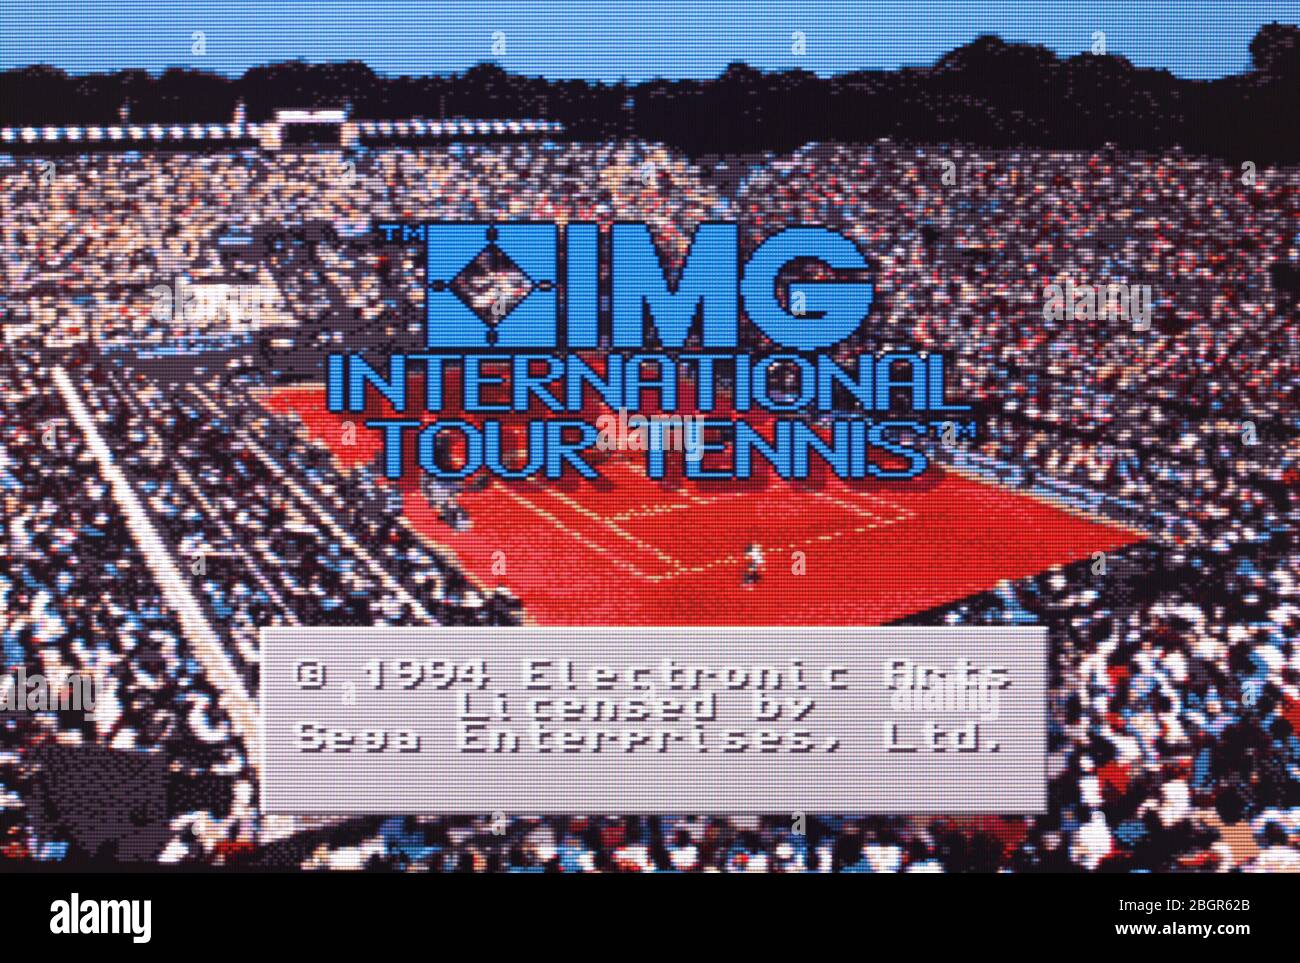 IMG International Tour Tennis - Sega Genesis Mega Drive - nur redaktionelle Verwendung Stockfoto